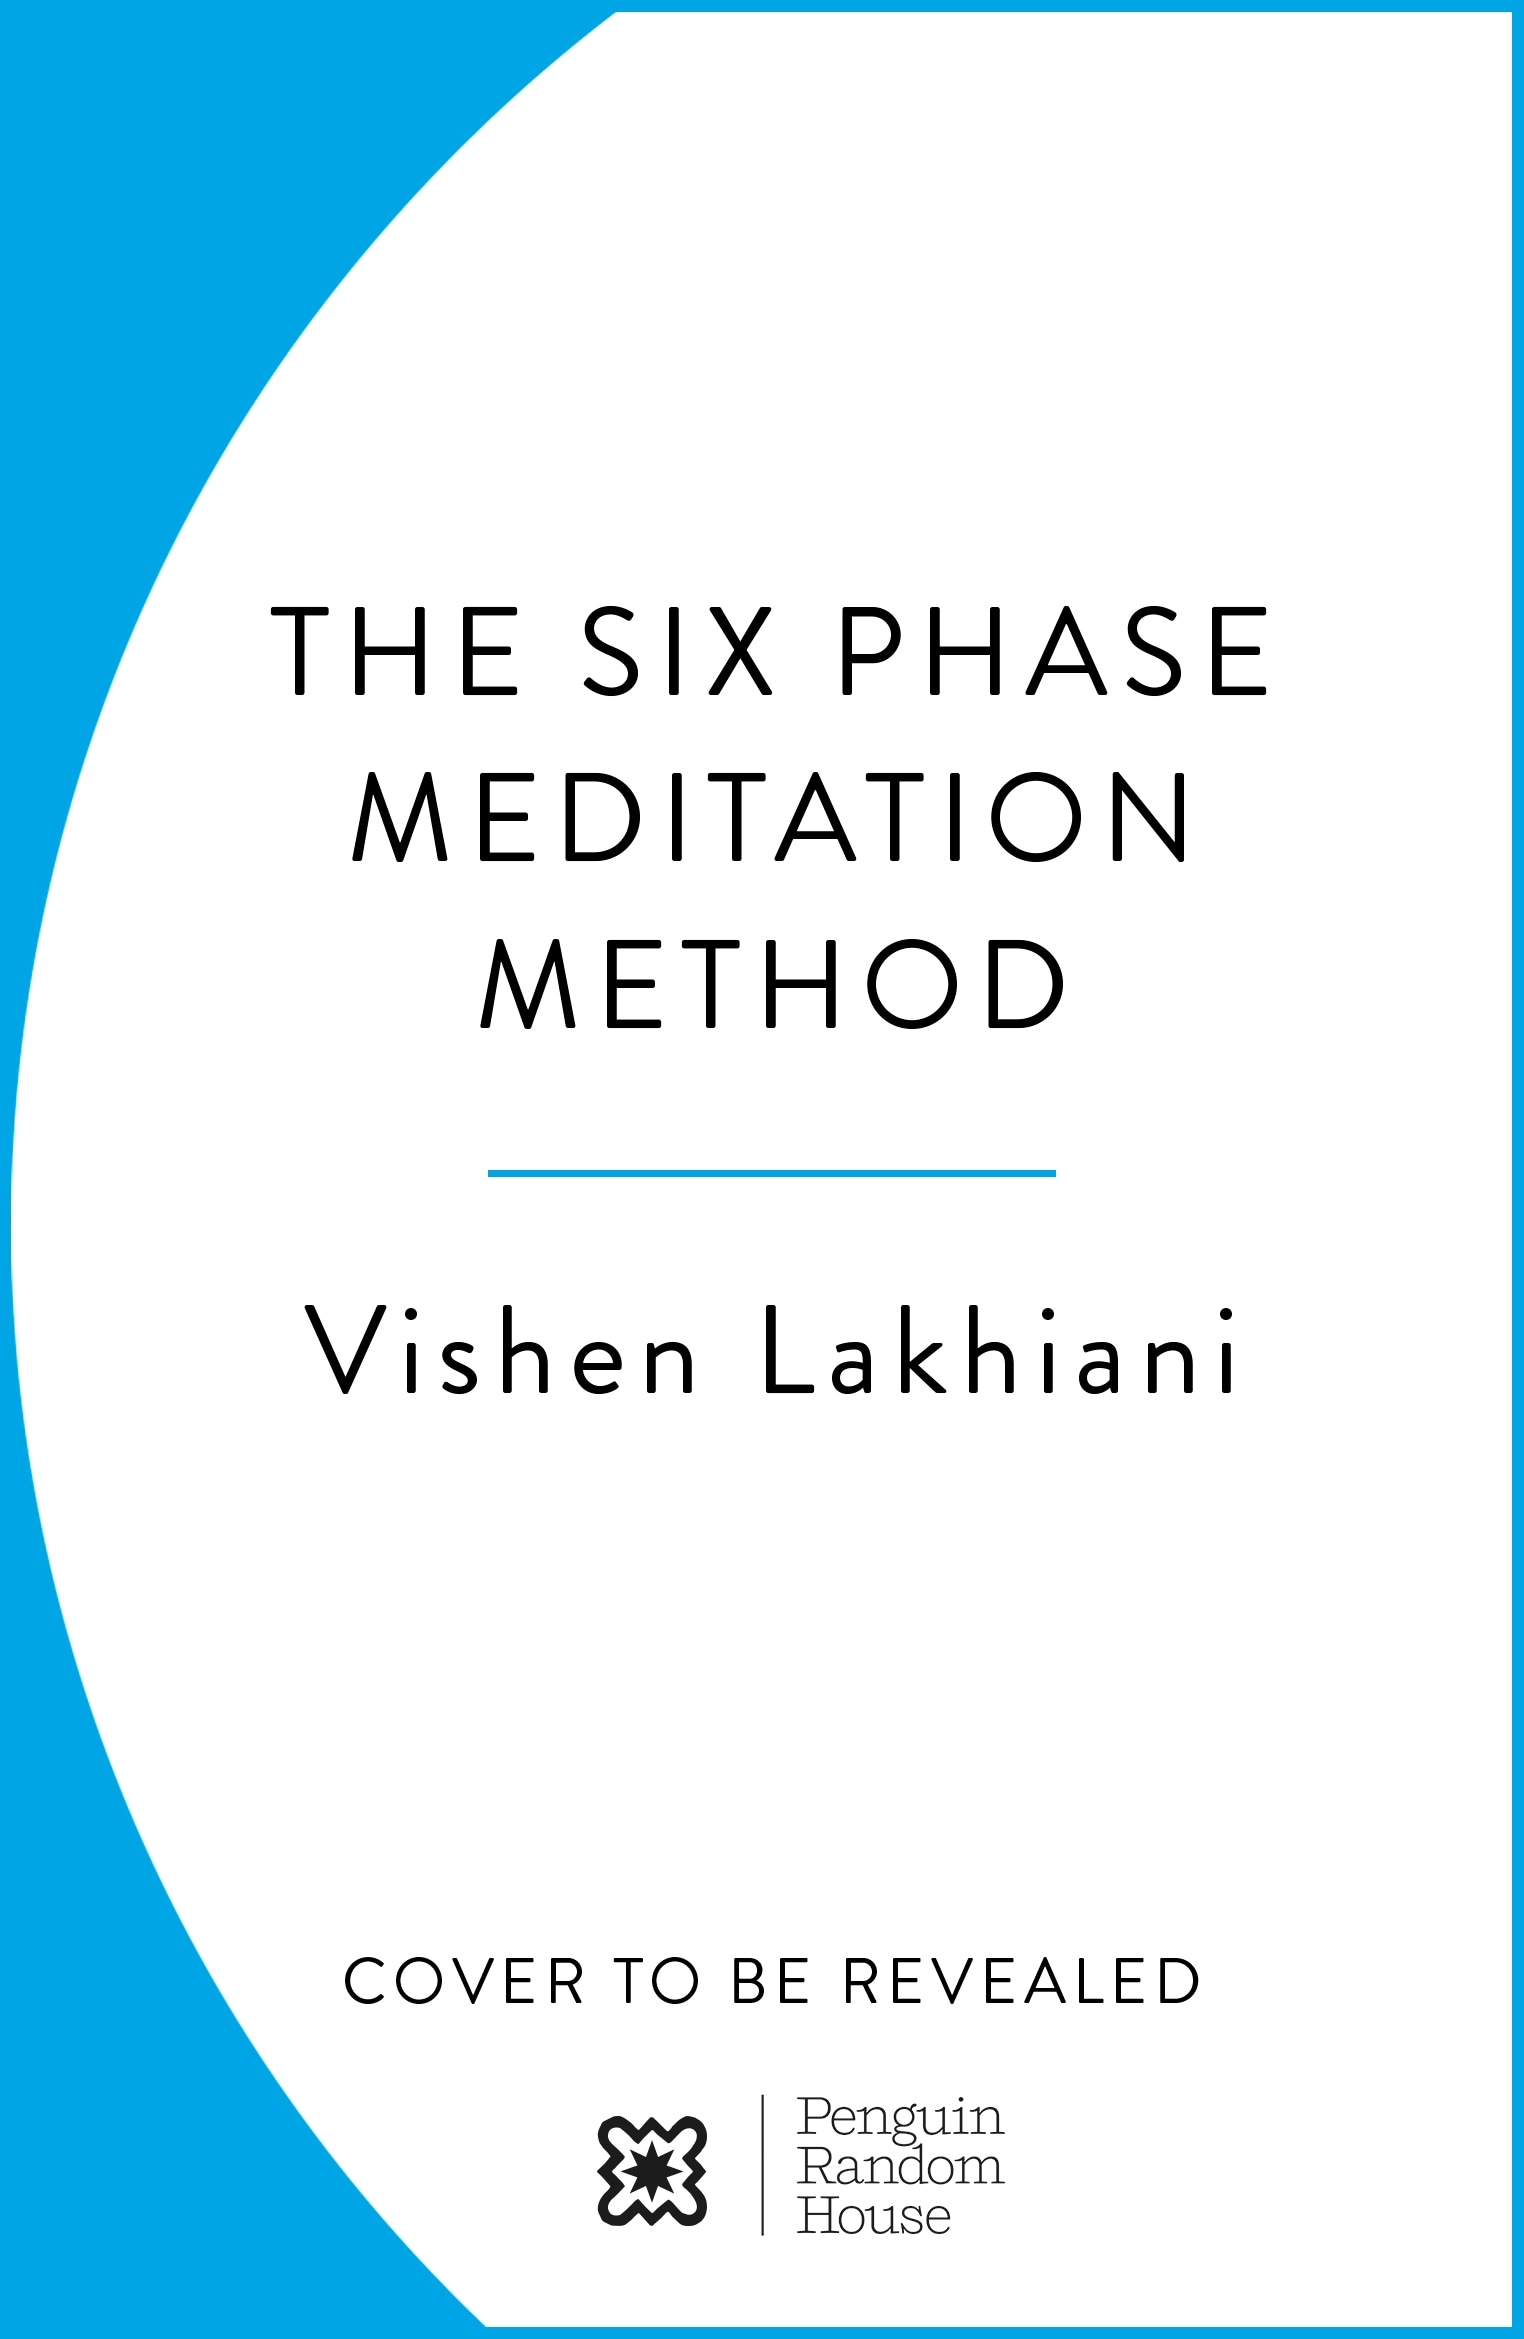 Book “The Six Phase Meditation Method” by Vishen Lakhiani — September 22, 2022